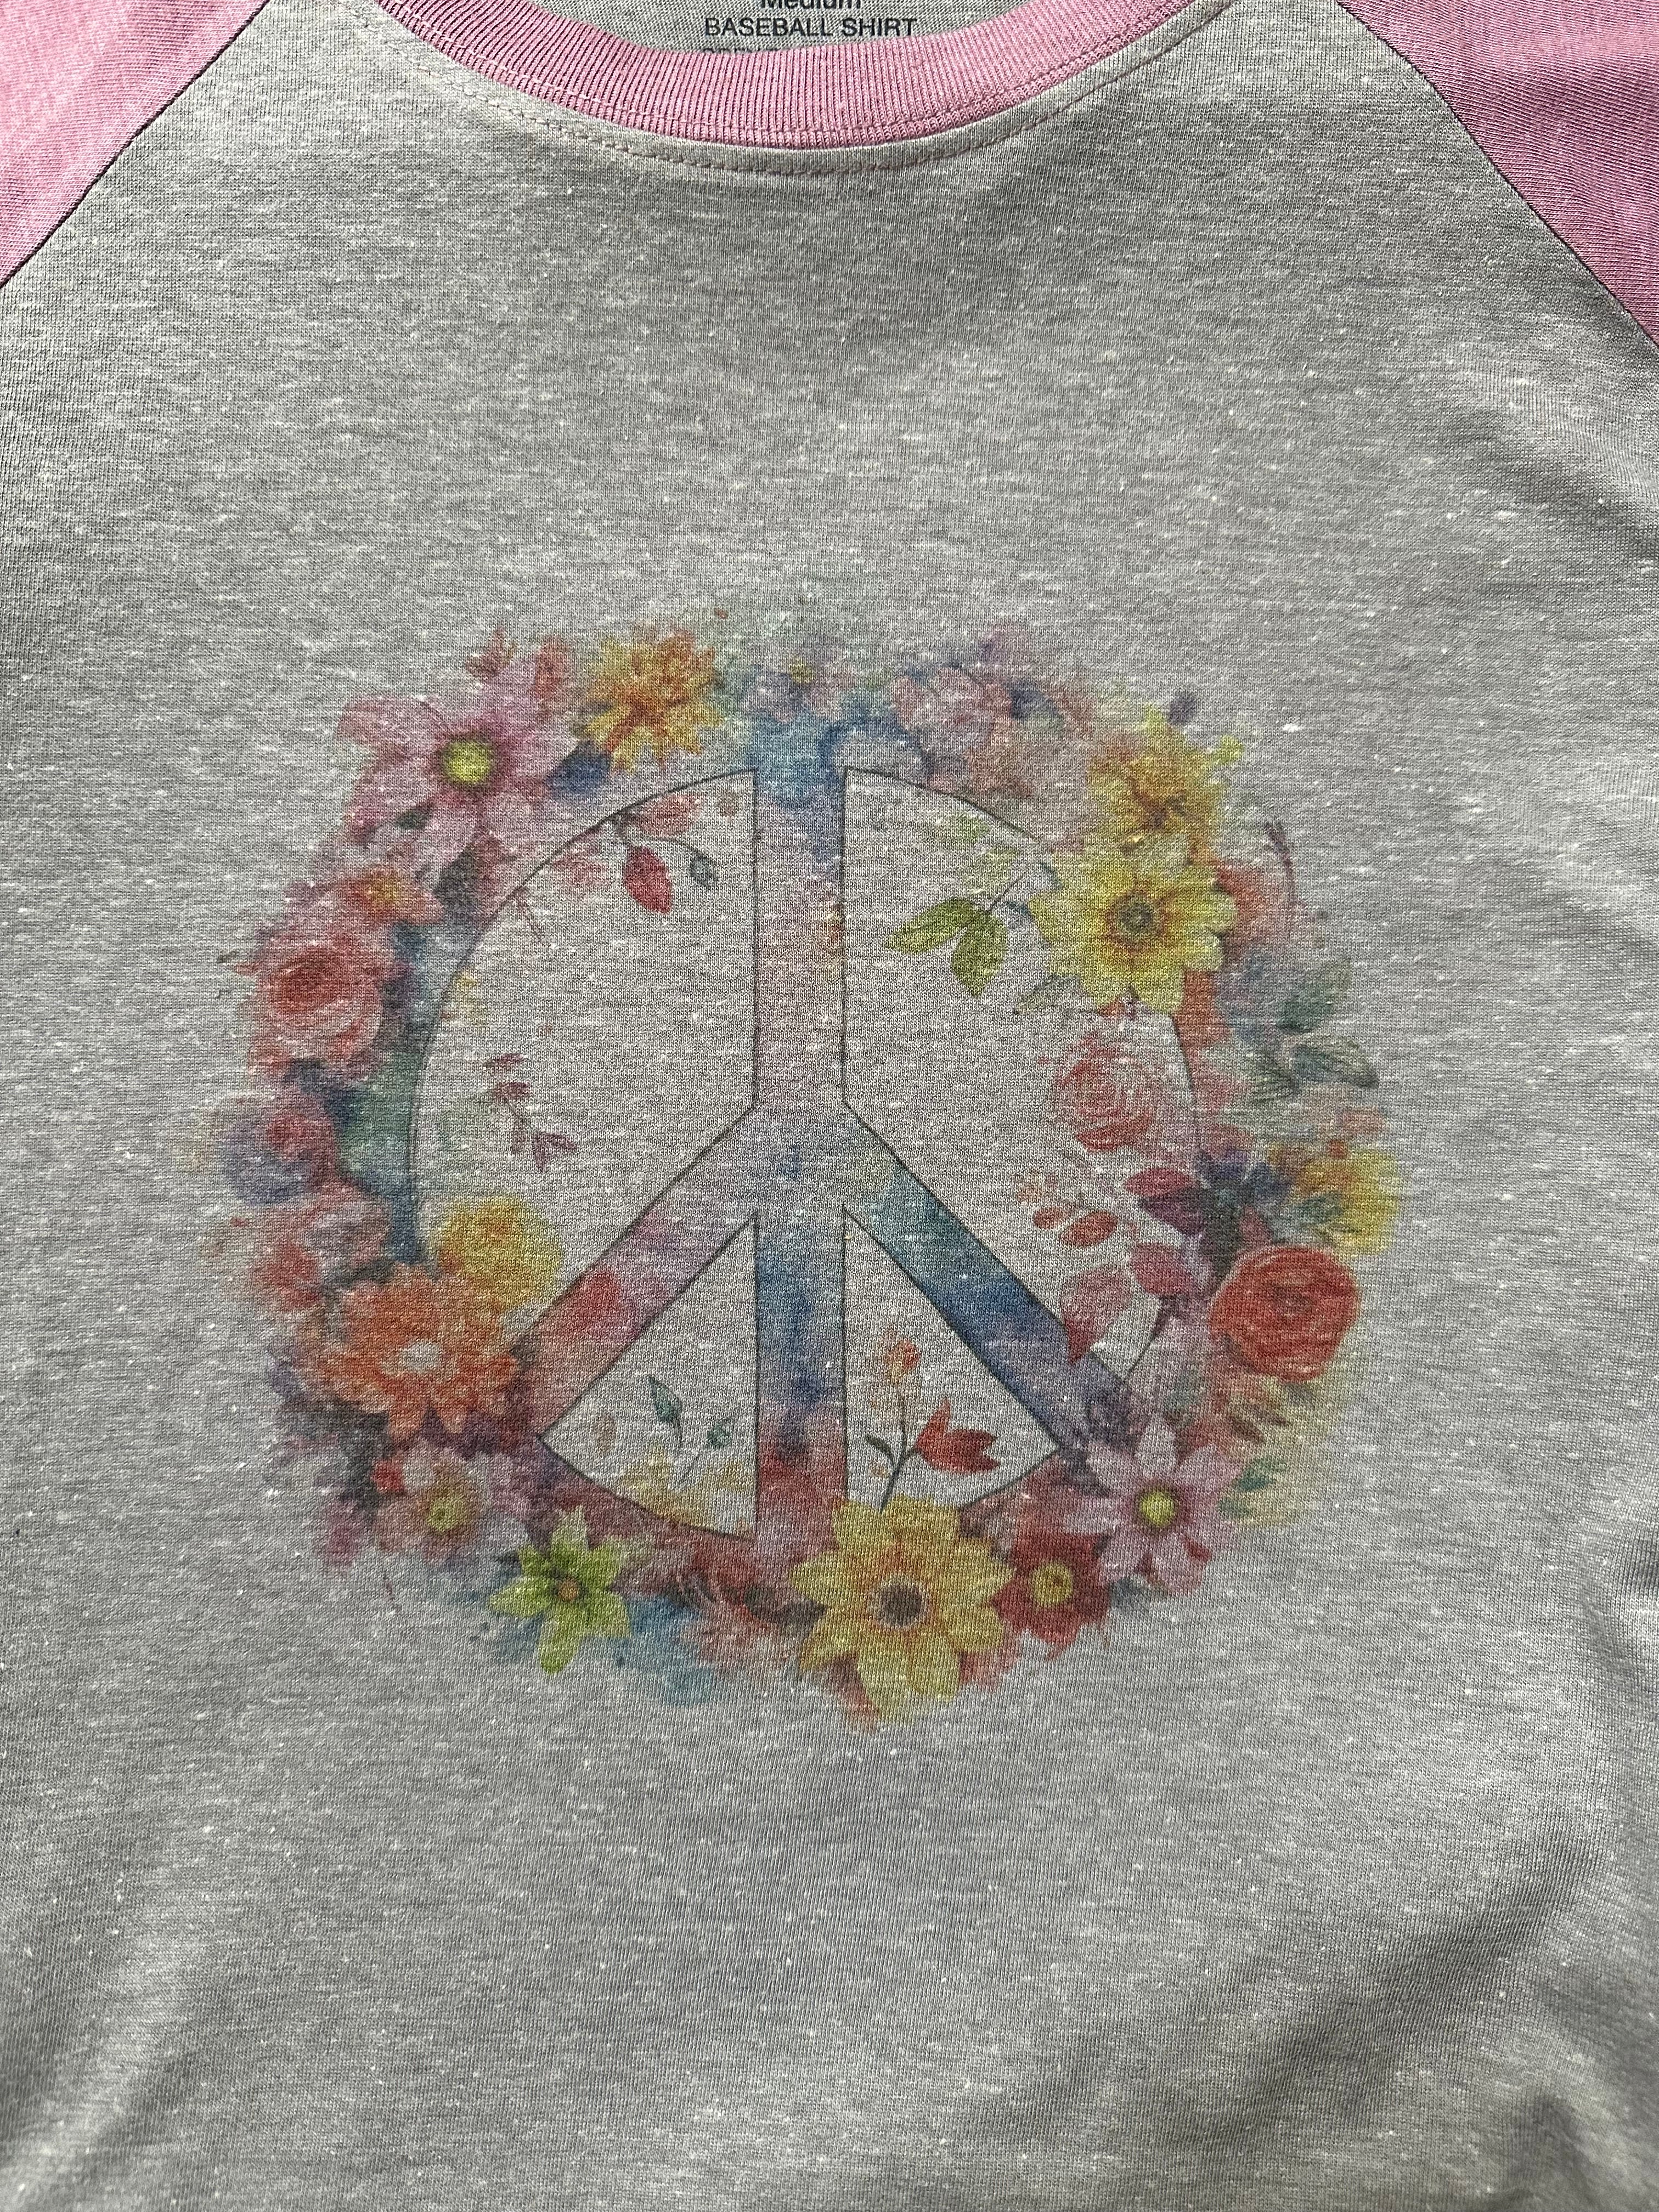 Floral Peace Baseball Shirt